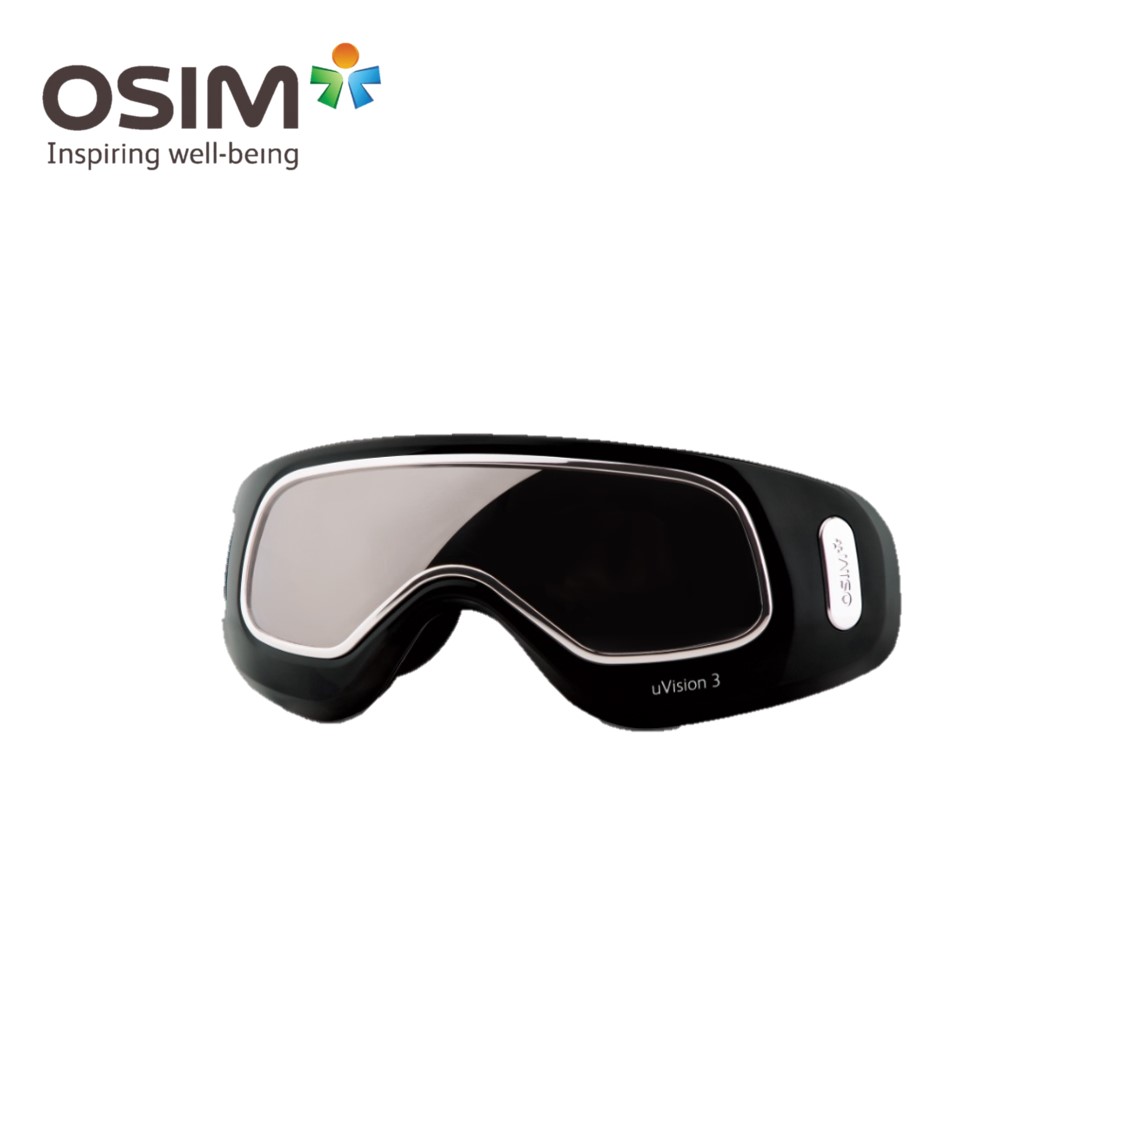 OSIM uVision 3 (Black) Eye Massager